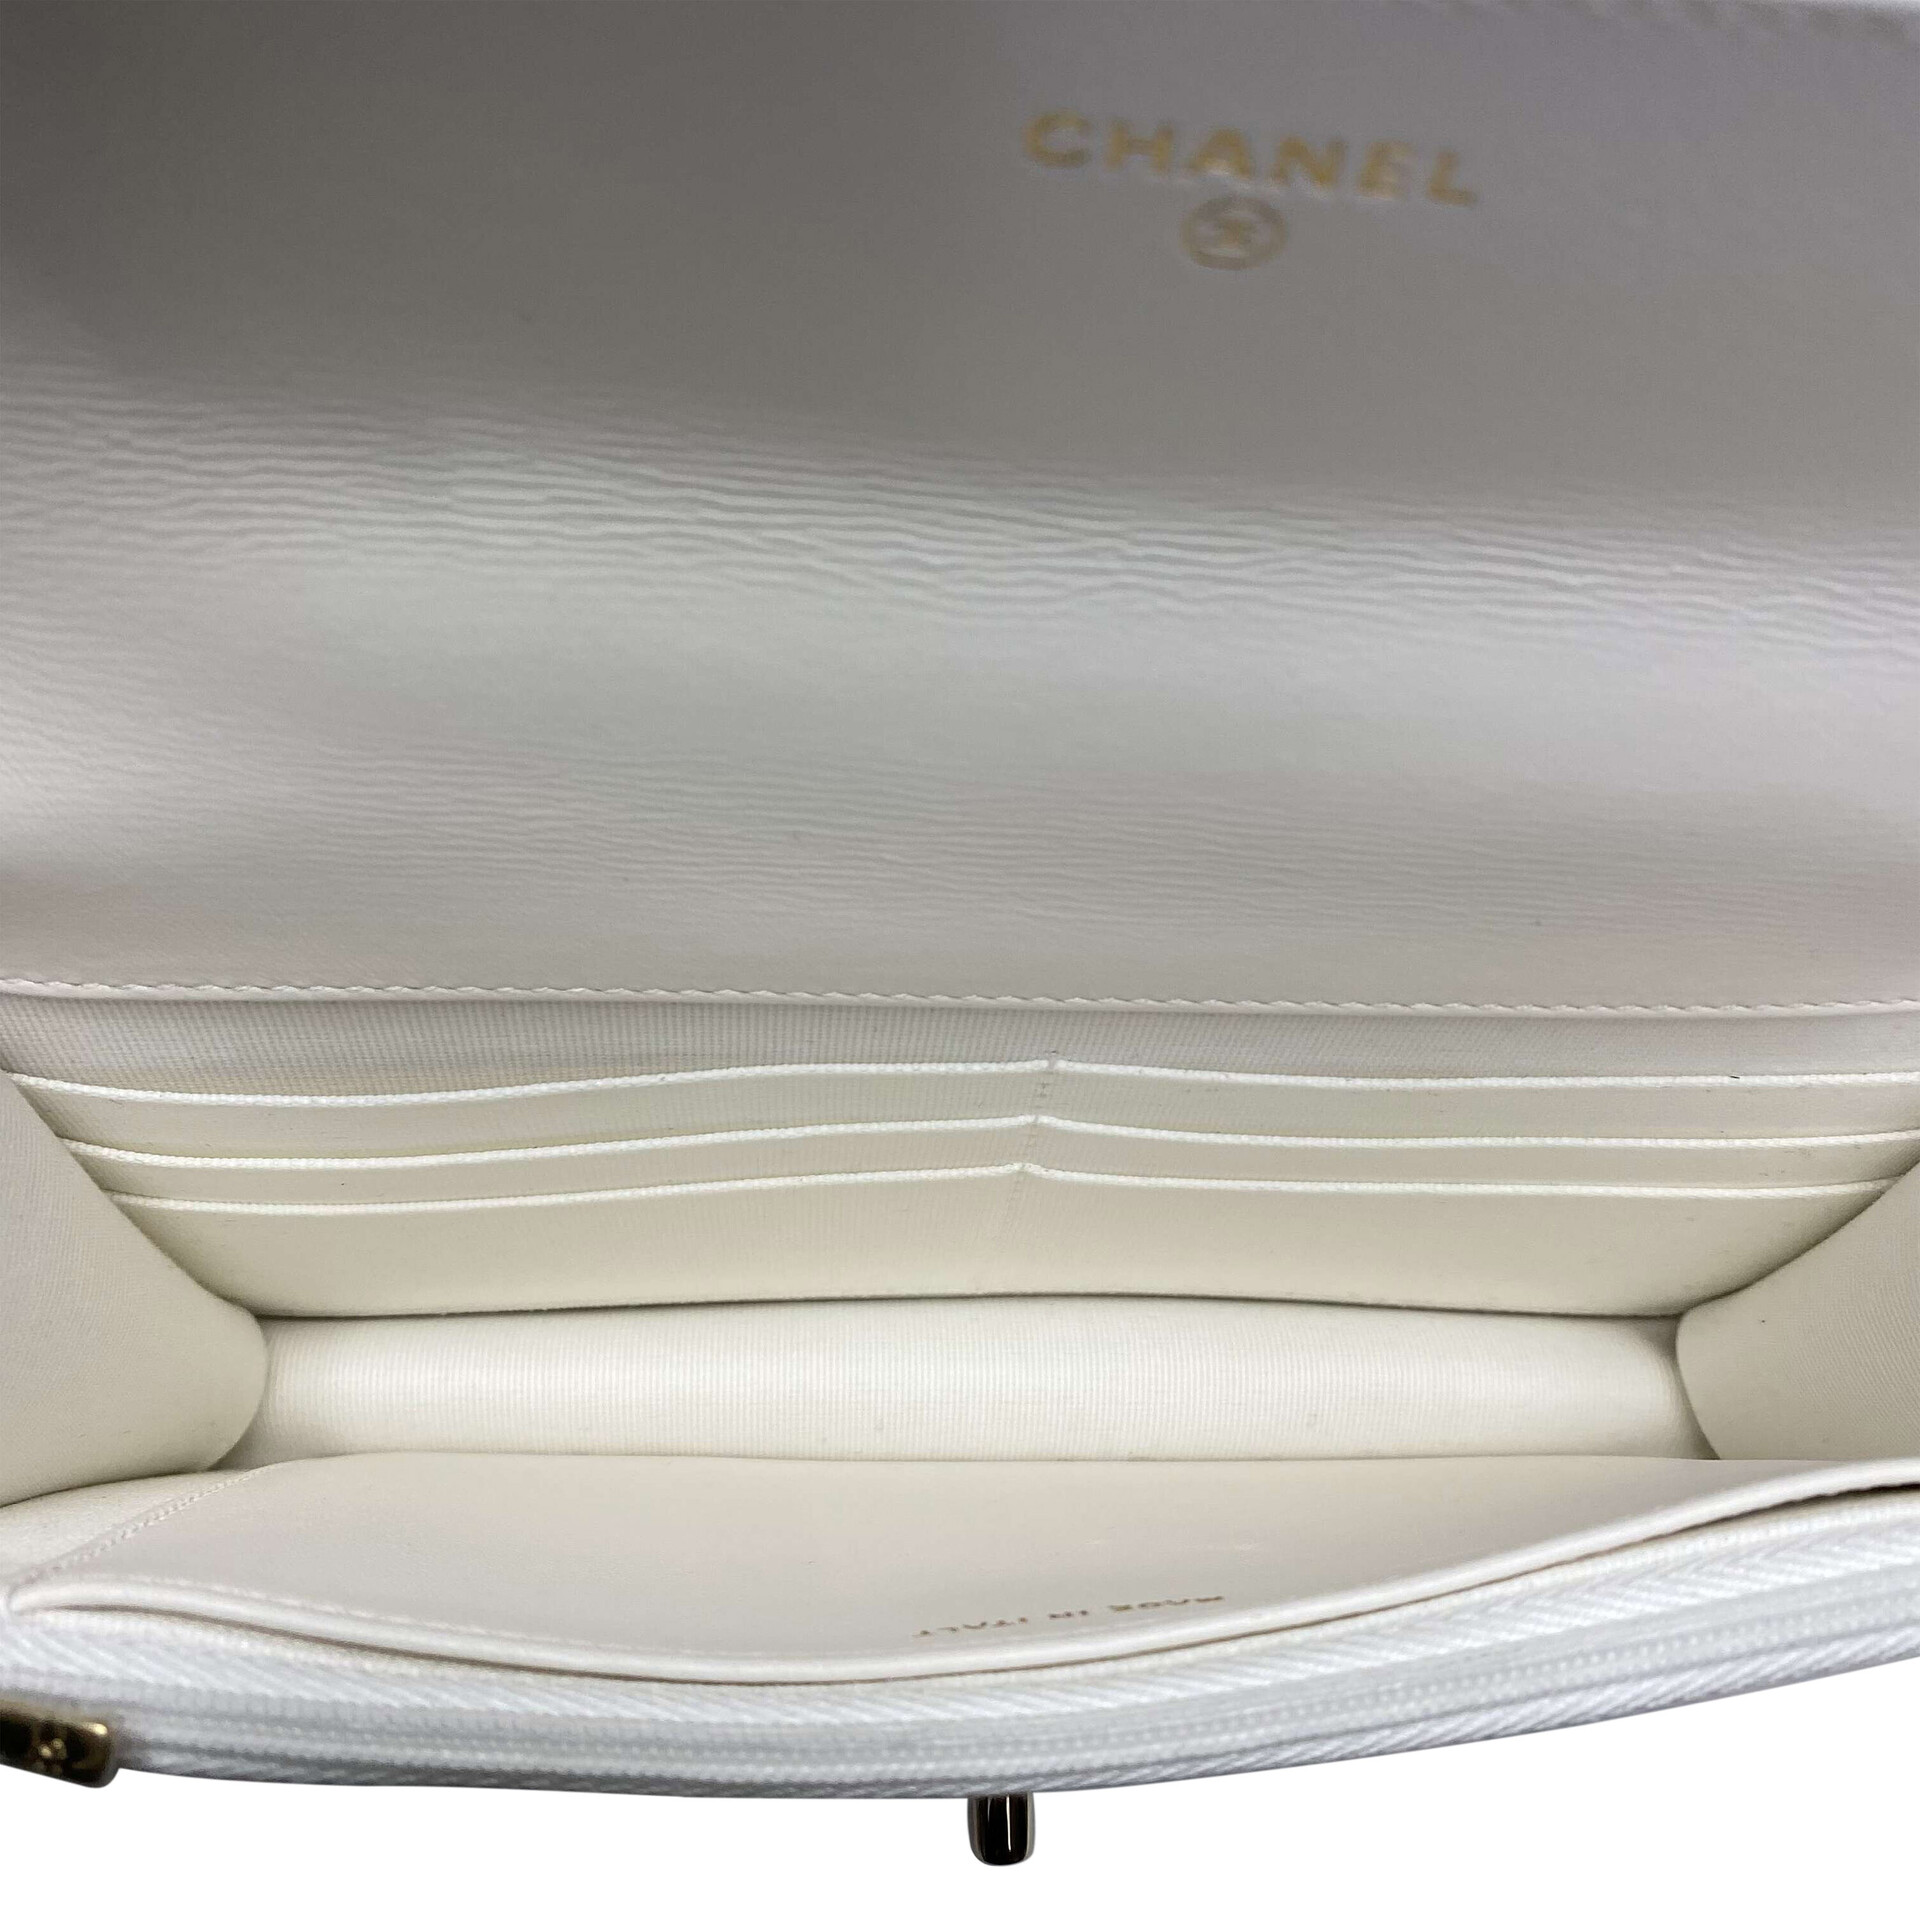 Bolsa Chanel Wallet Chain Branca